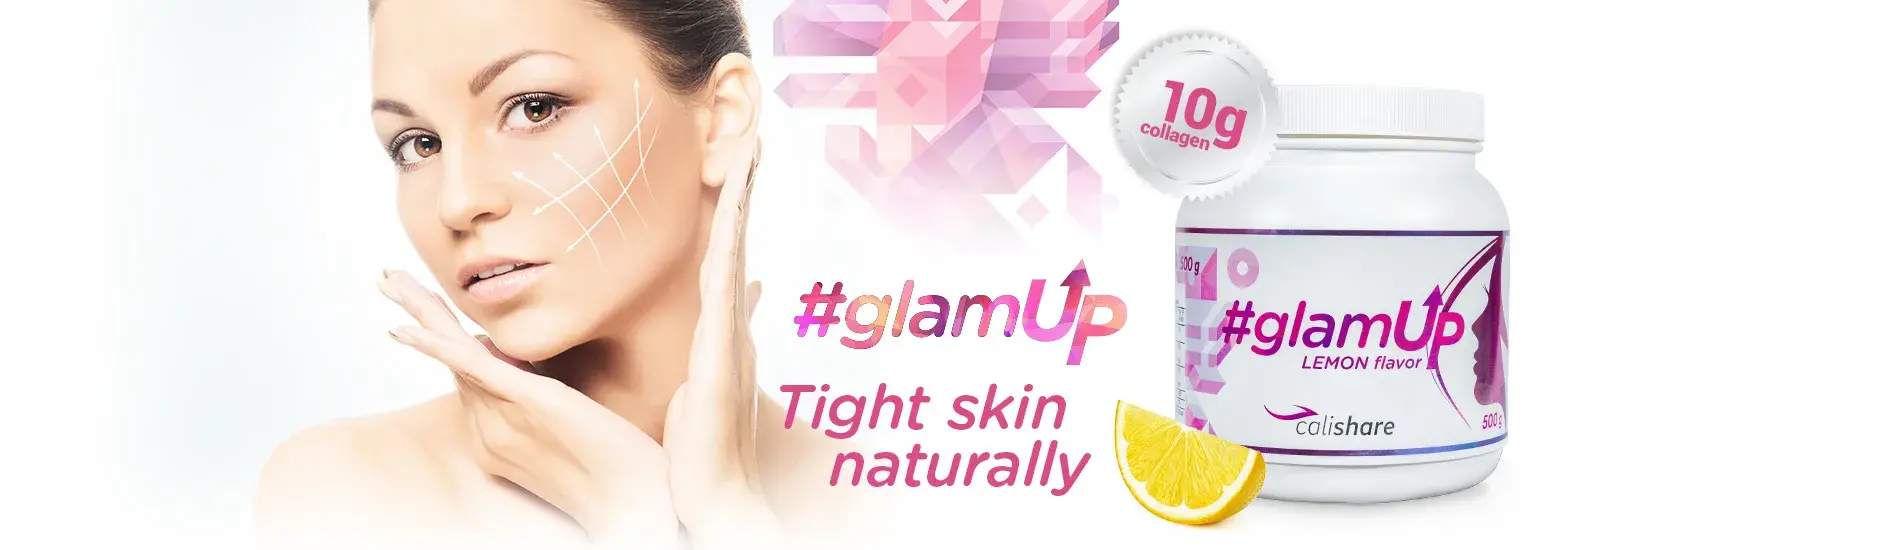 #Glamup - Strakke huid natuurlijk